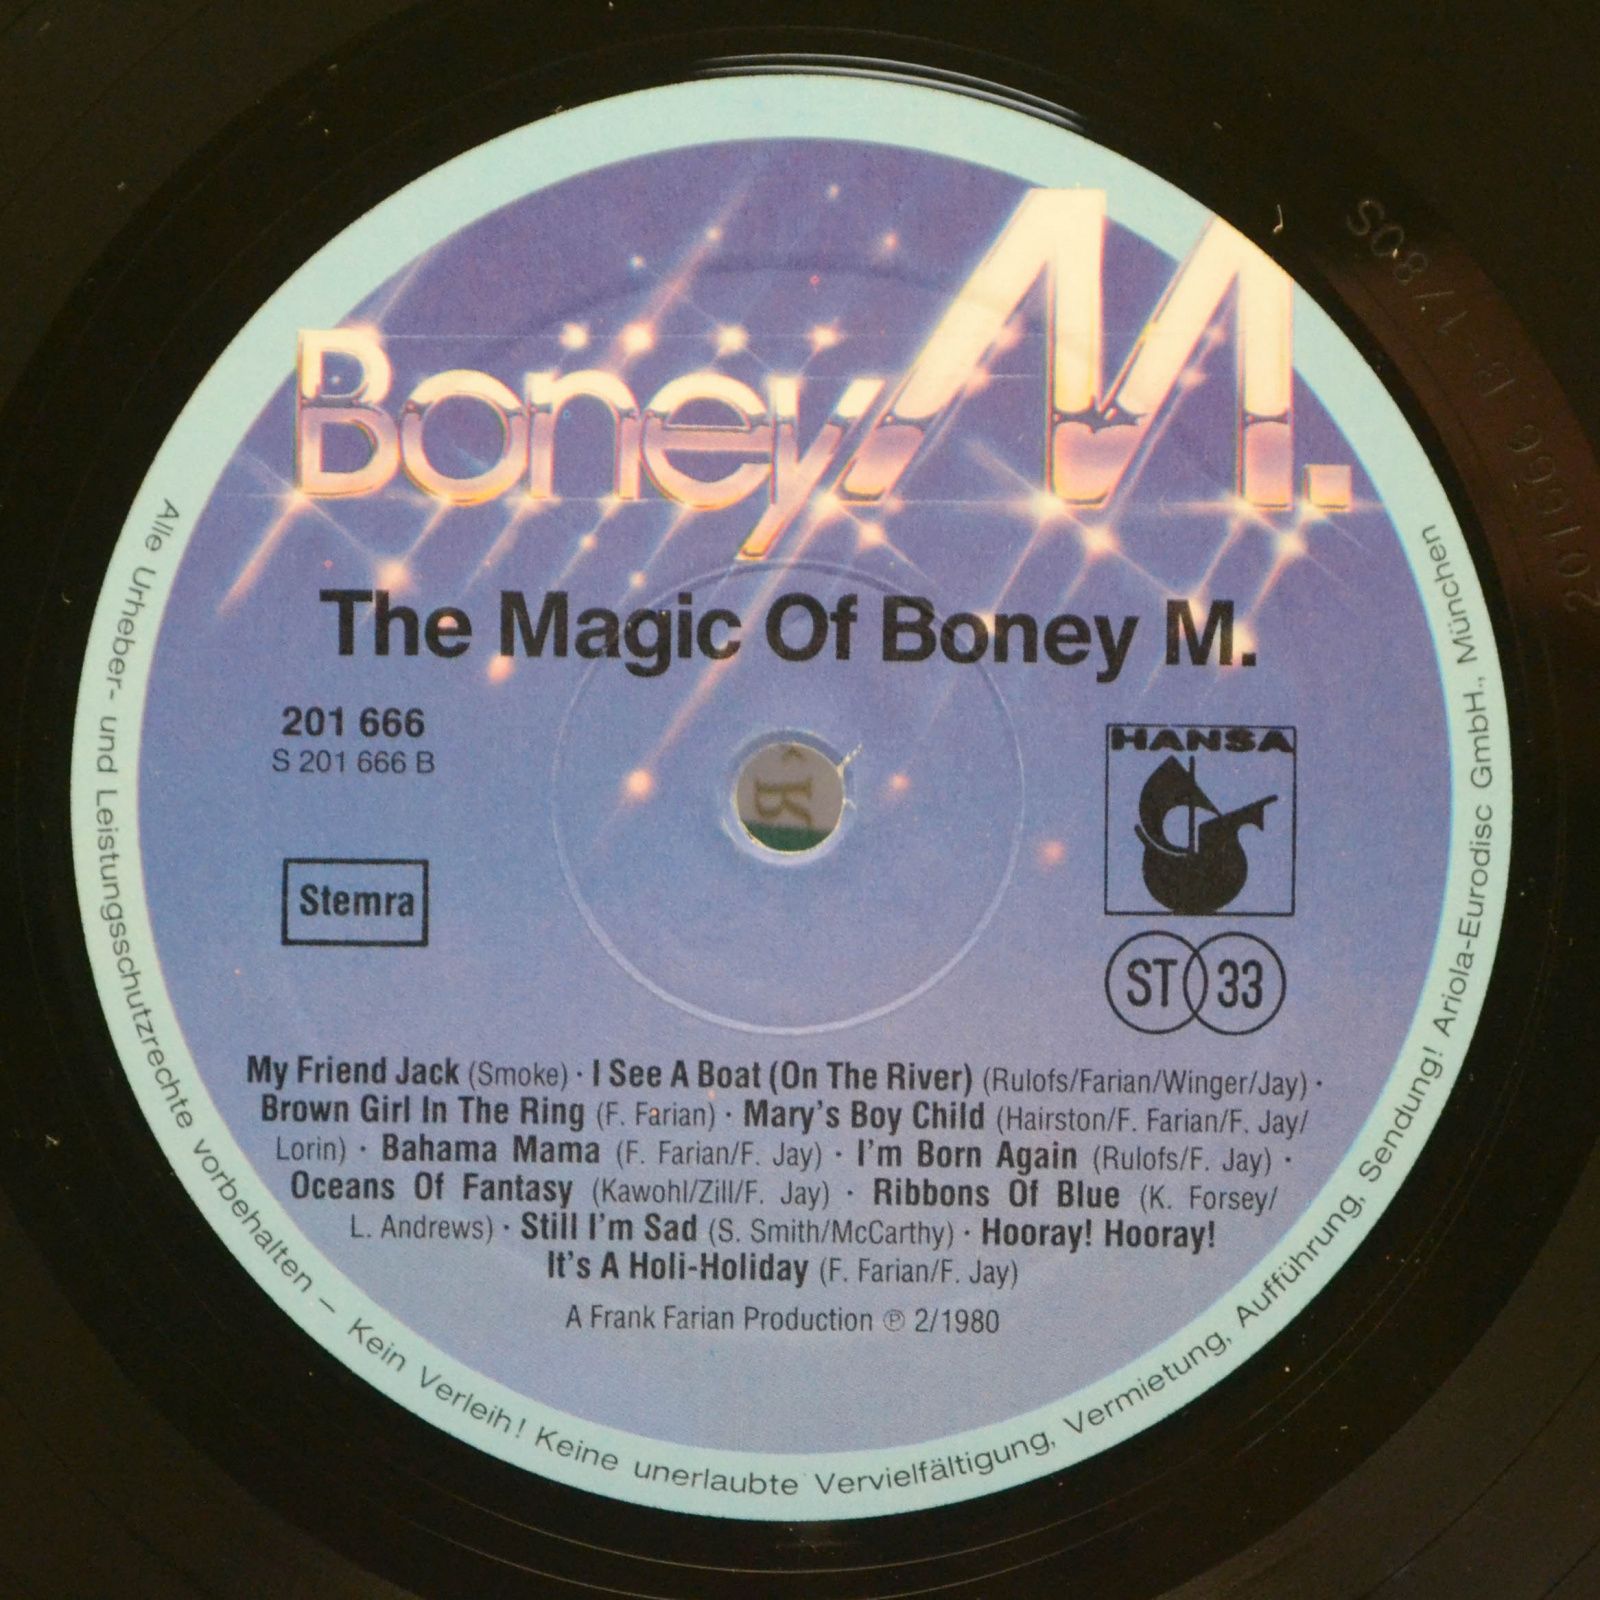 Boney M. — The Magic Of Boney M. - 20 Golden Hits, 1980